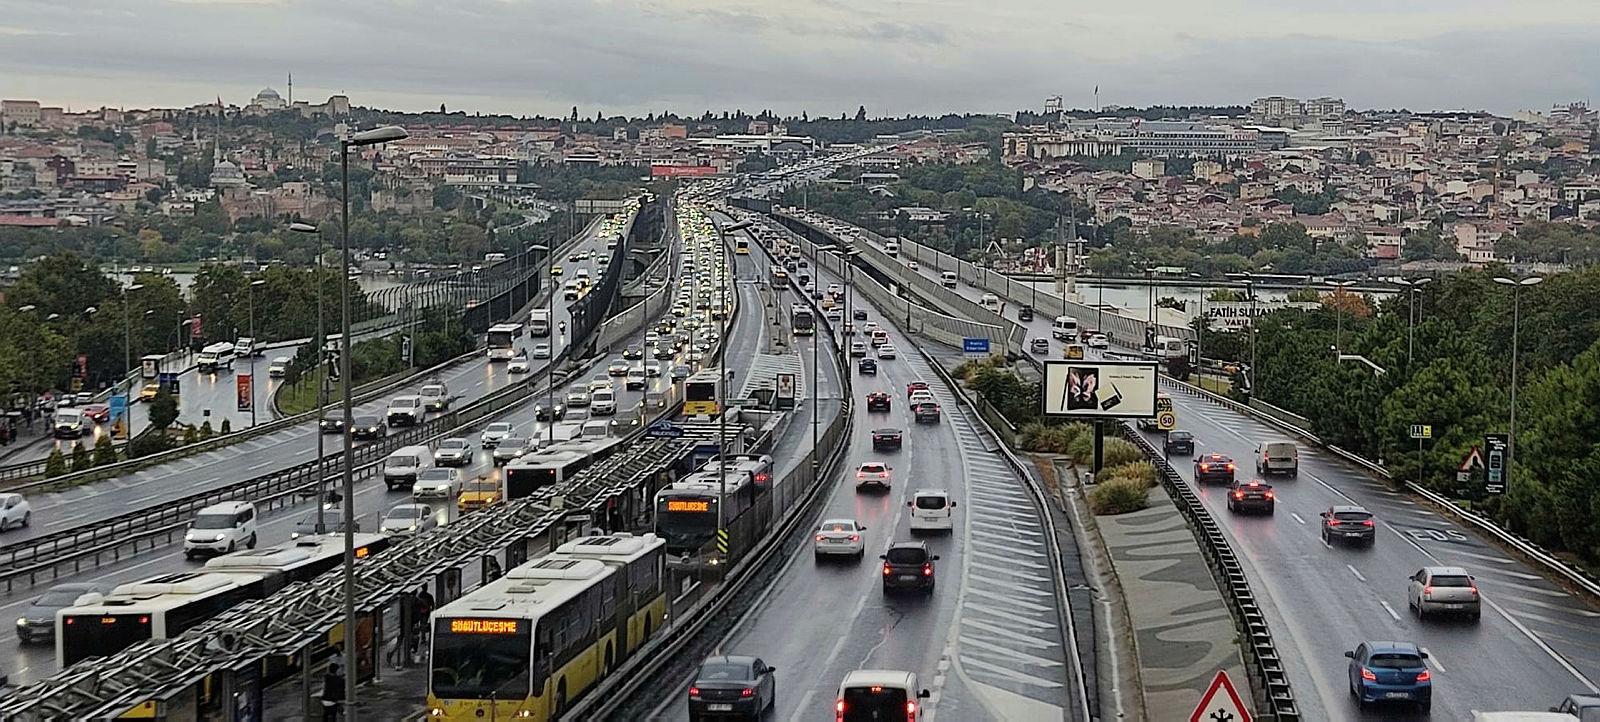 Son dakika: İstanbulda sağanak etkili oldu trafik kilitlendi!